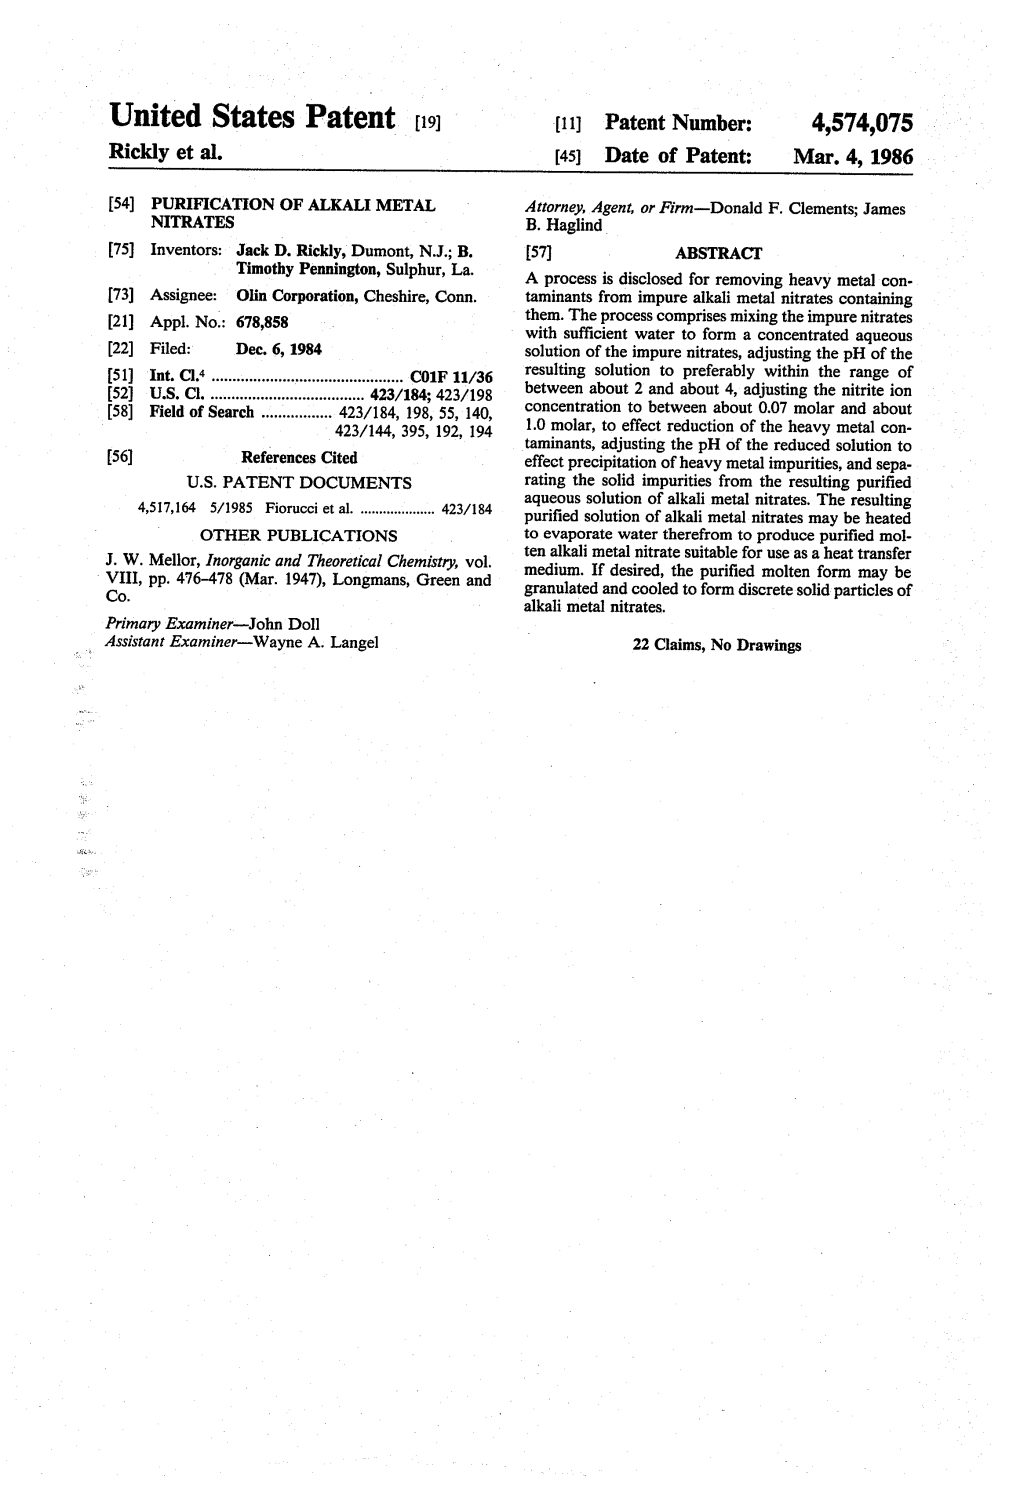 United States Patent (1) 11 Patent Number: 4,574,075 Rickly Et Al